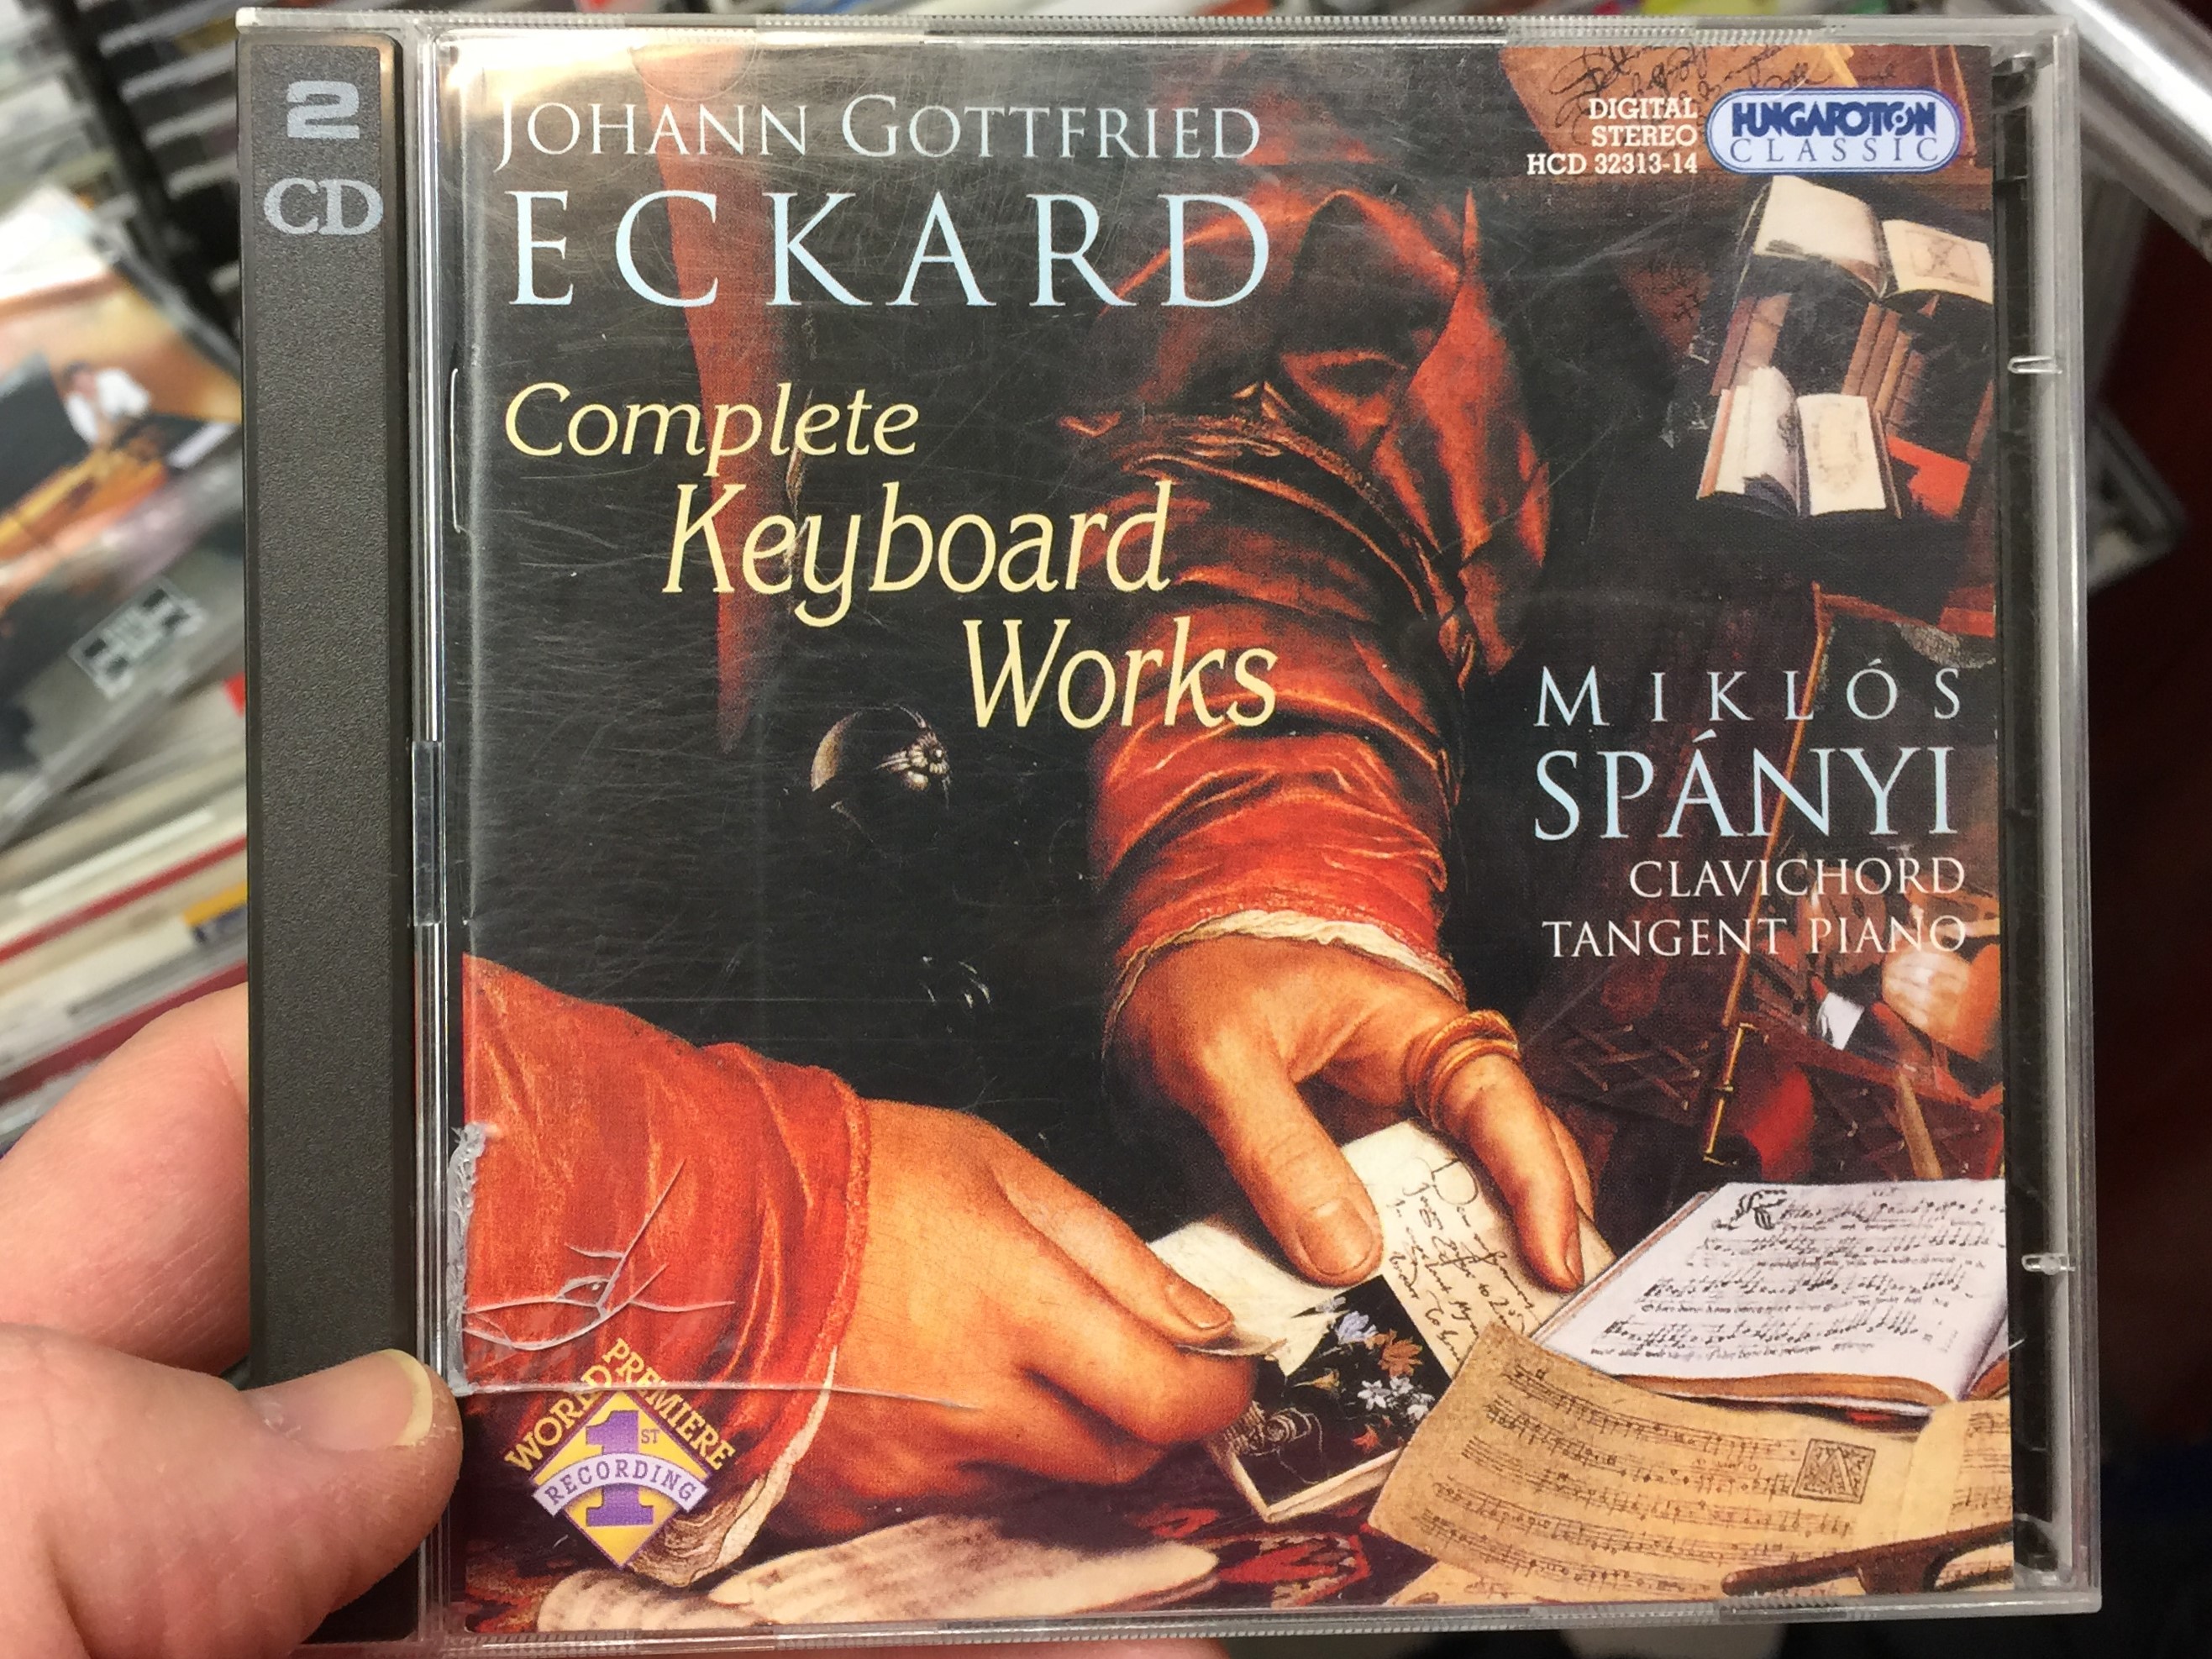 johann-gottfried-eckard-complete-keyboard-works-miklos-spanyi-clavichord-tangent-piano-hungaroton-classic-audio-cd-2004-stereo-hcd-32313-14-1-.jpg